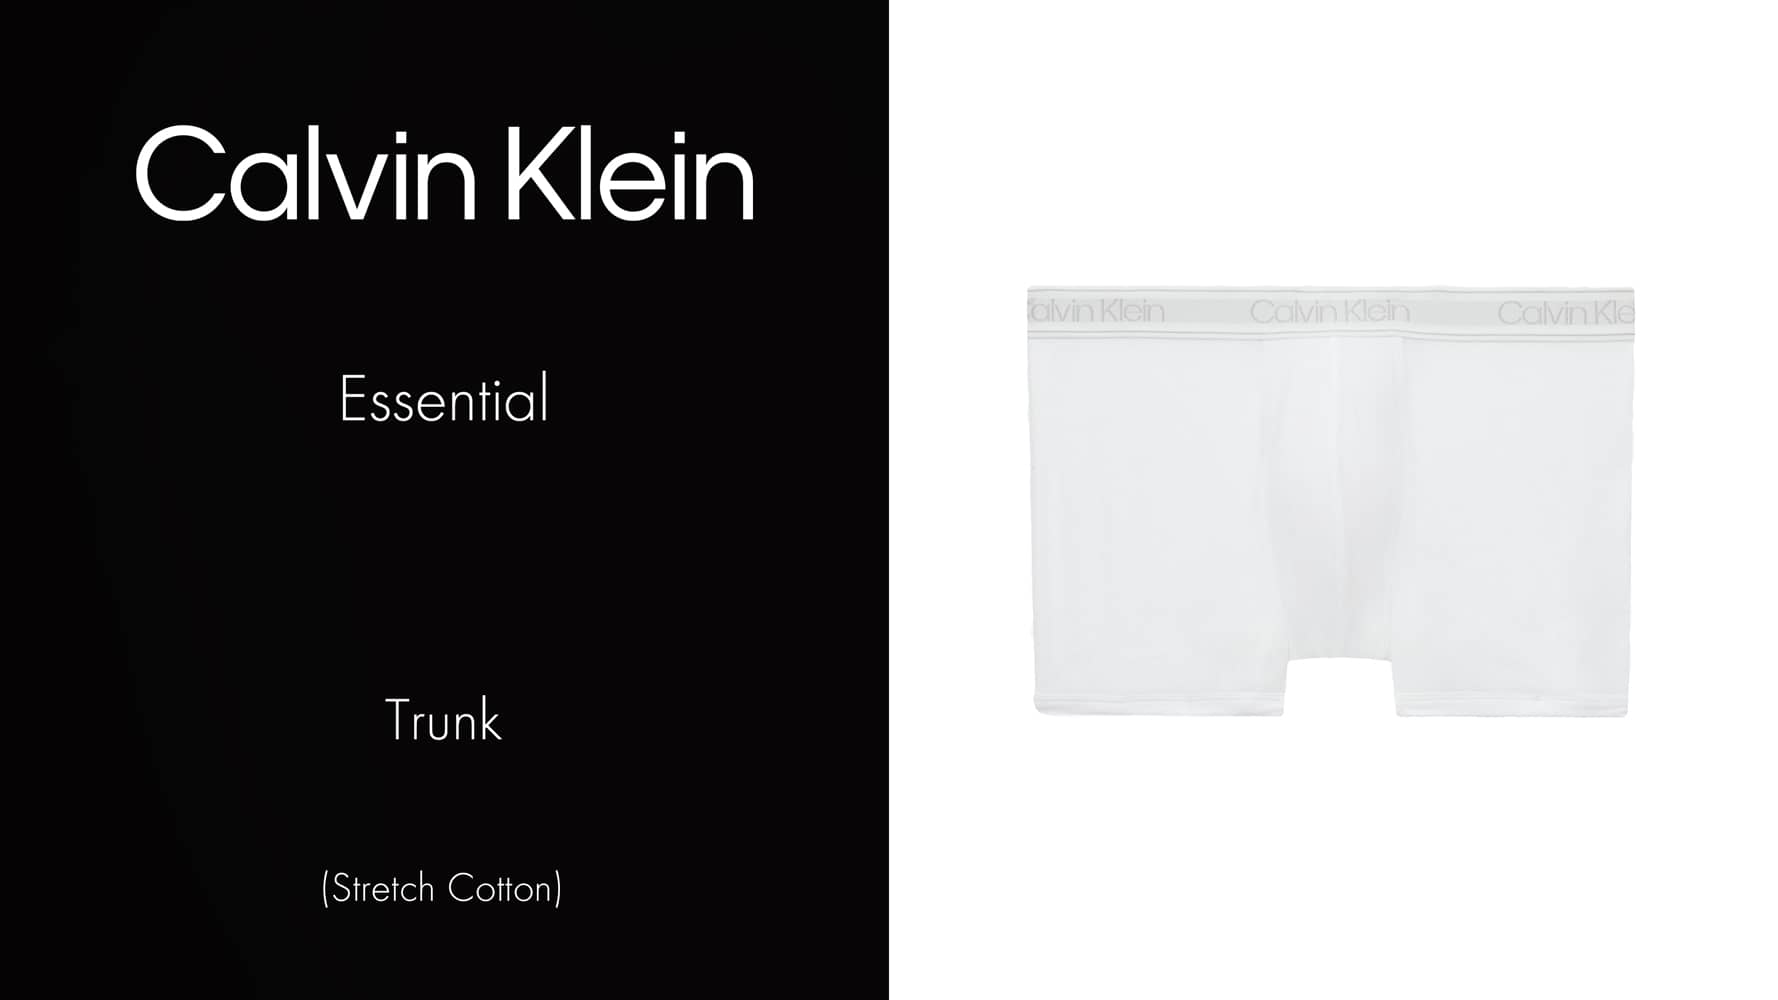 Trunk - Essential Calvin